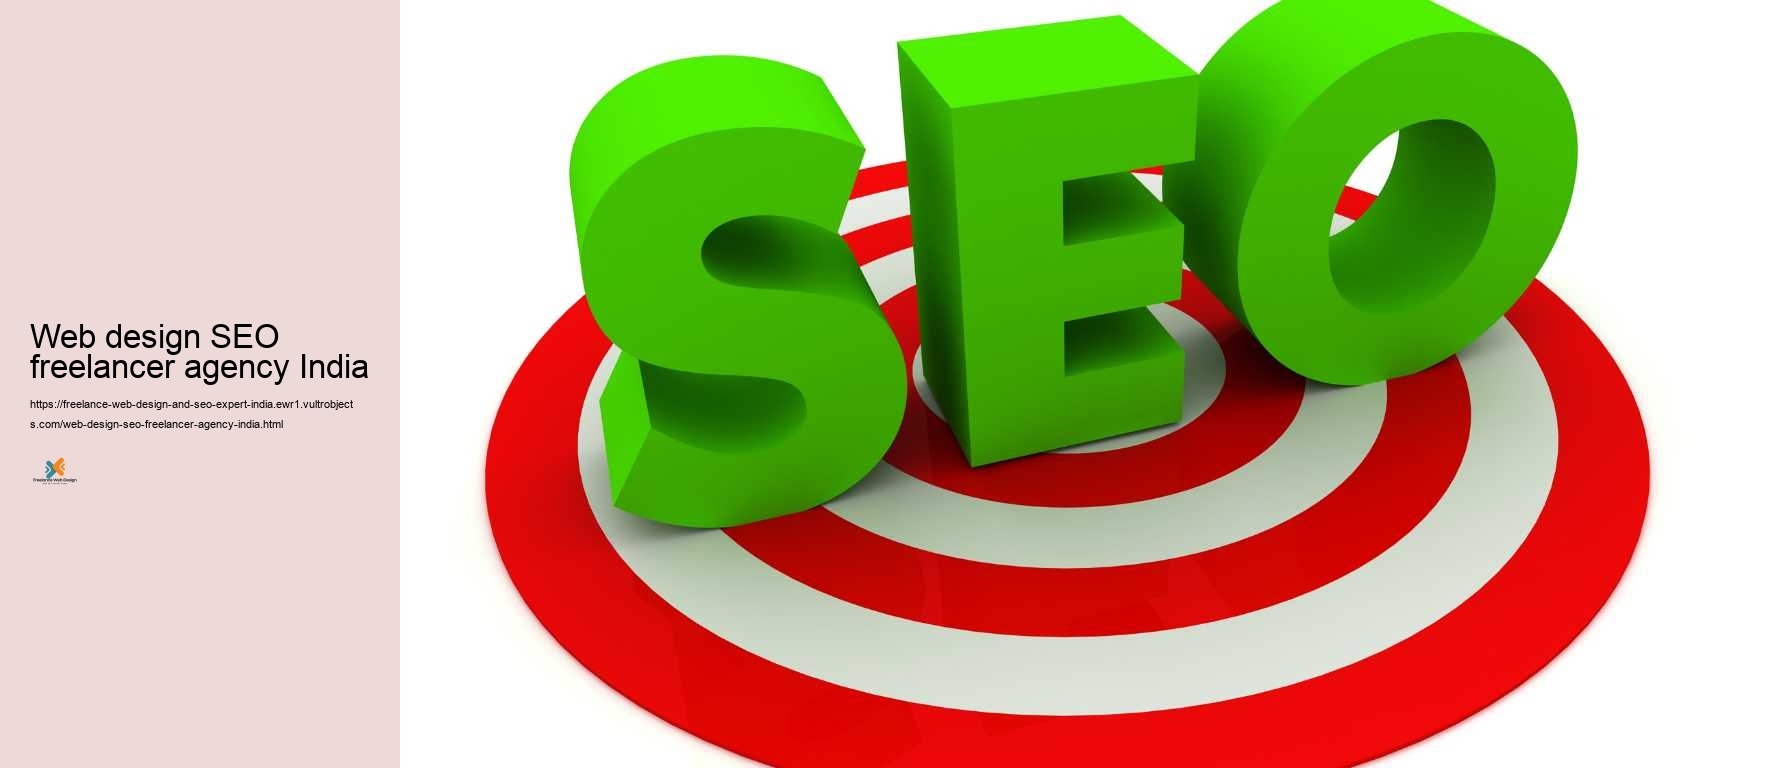 Web design SEO freelancer agency India